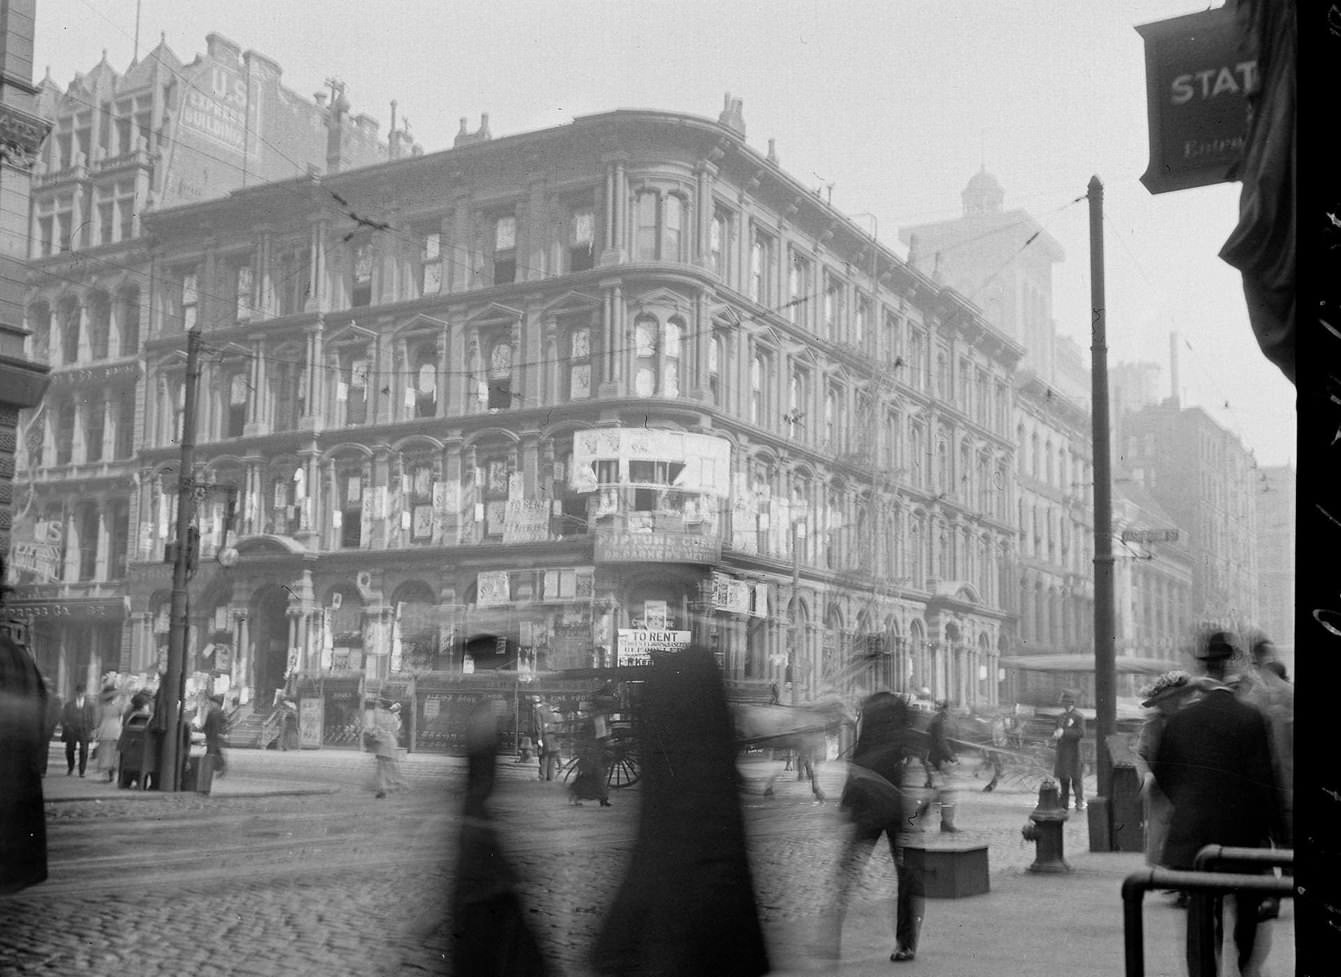 The northwest corner of Dearborn Street and Washington Street, Chicago, Illinois, 1910s.